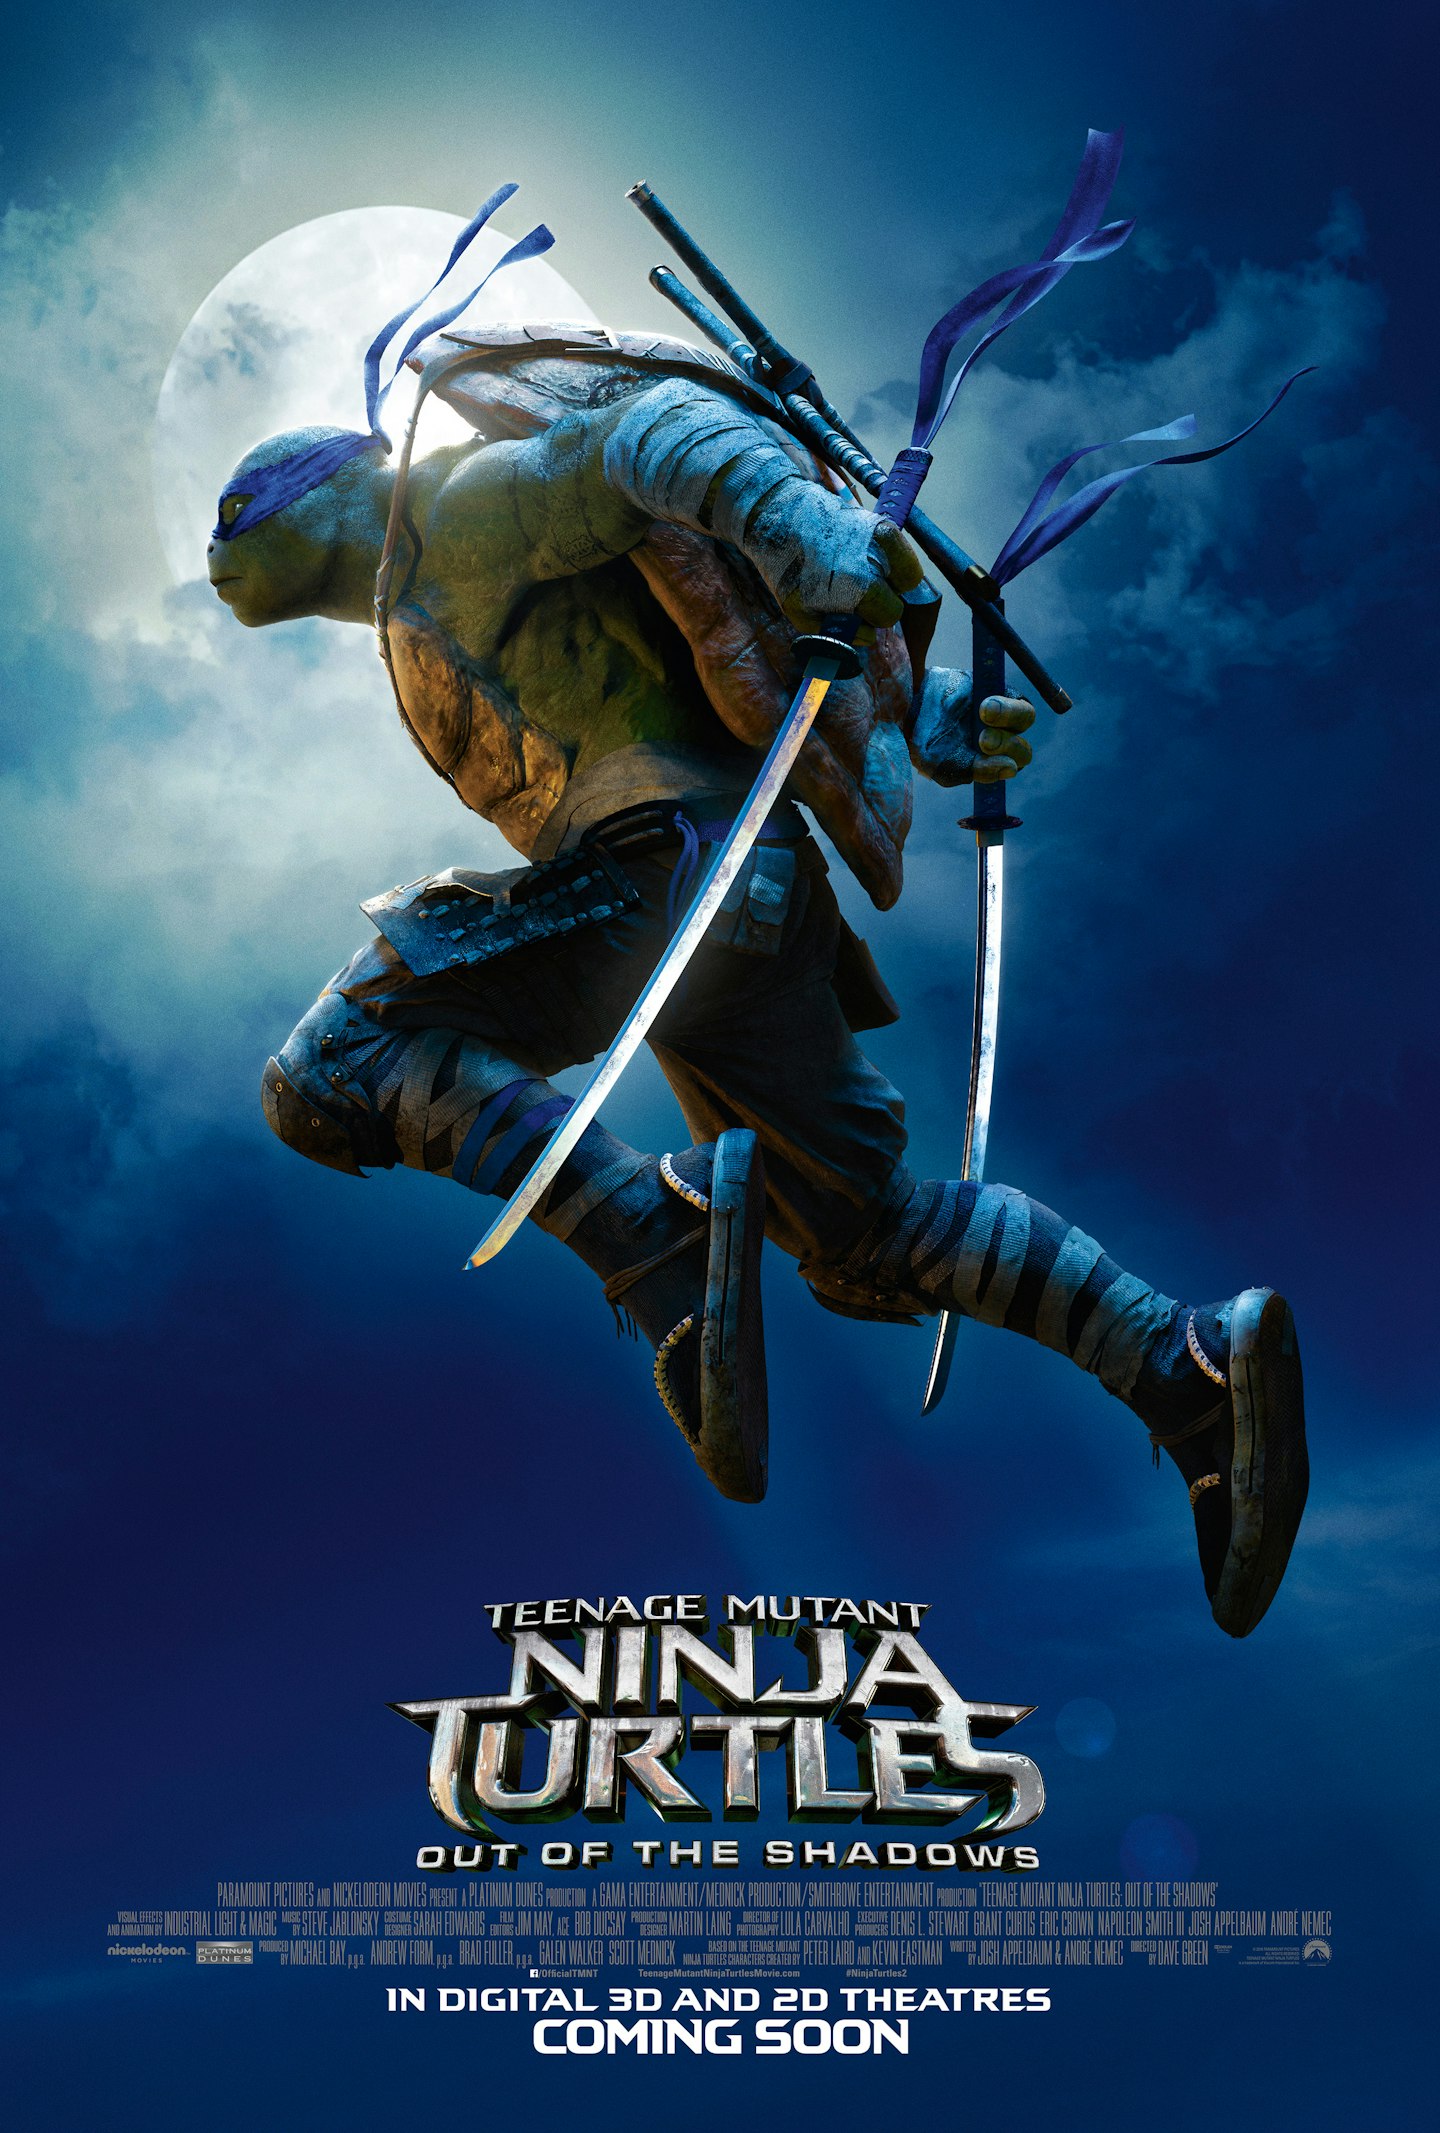 Teenage Mutant Ninja Turtles: Out Of The Shadows moon poster